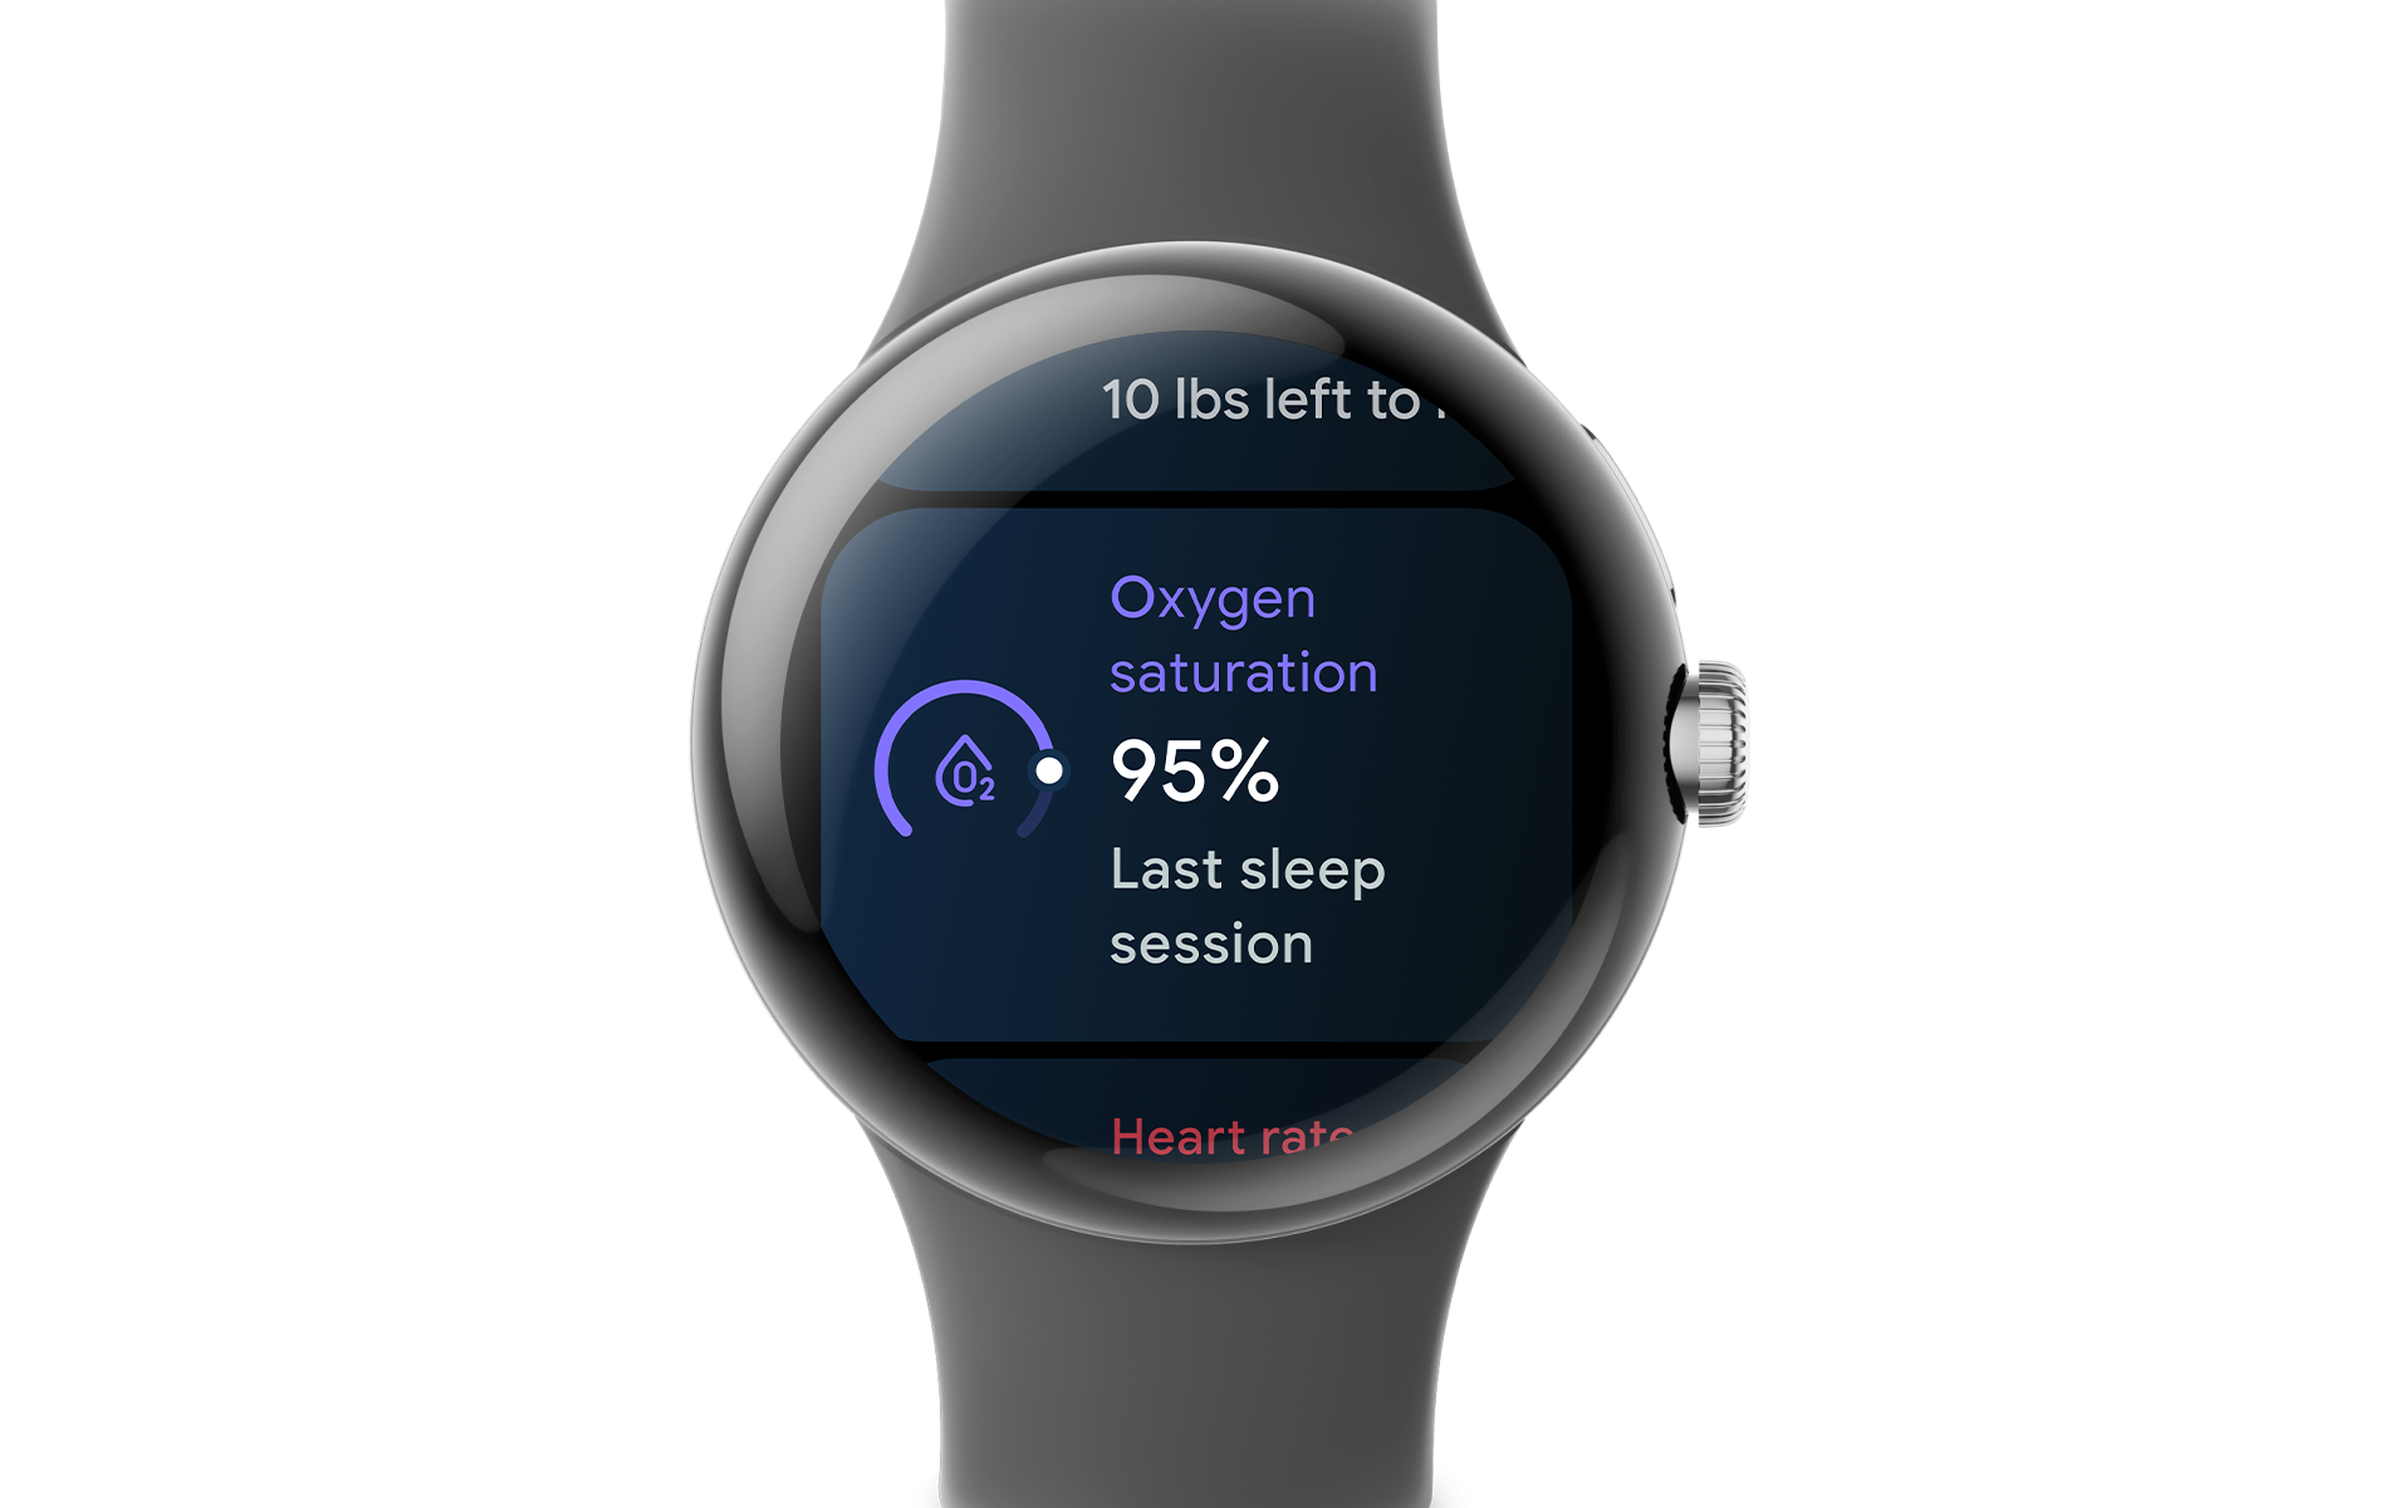 Pixel Watch render showing oxygen saturation metric